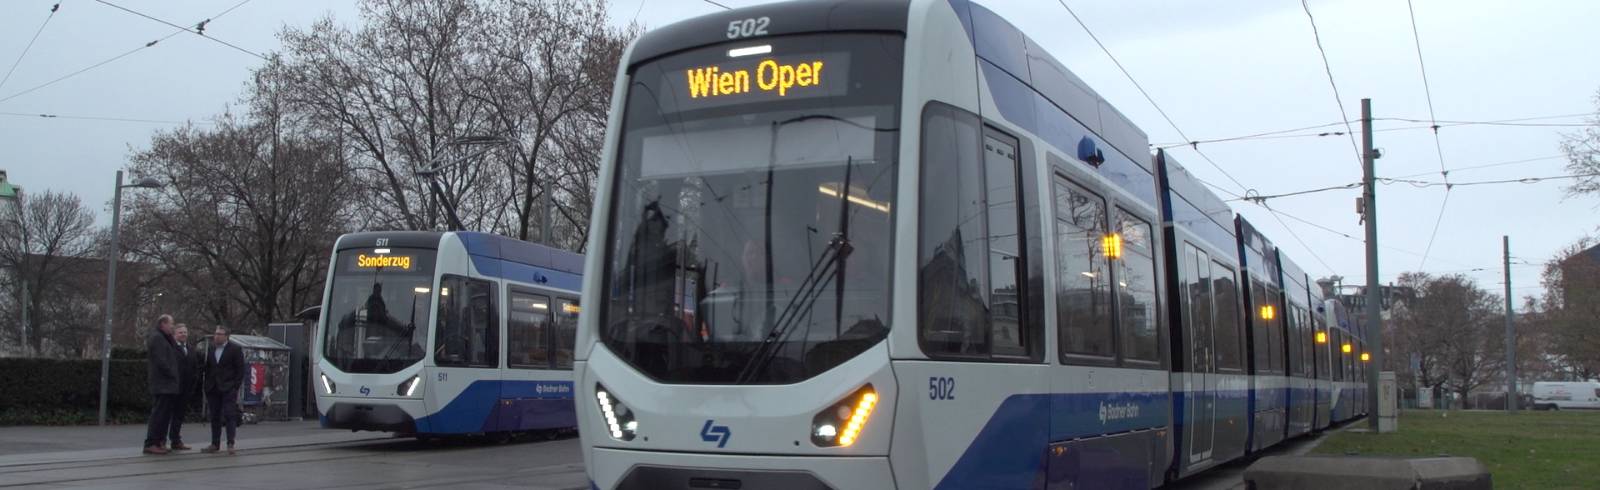 Badner Bahn beliebteste Regionalbahn Österreichs